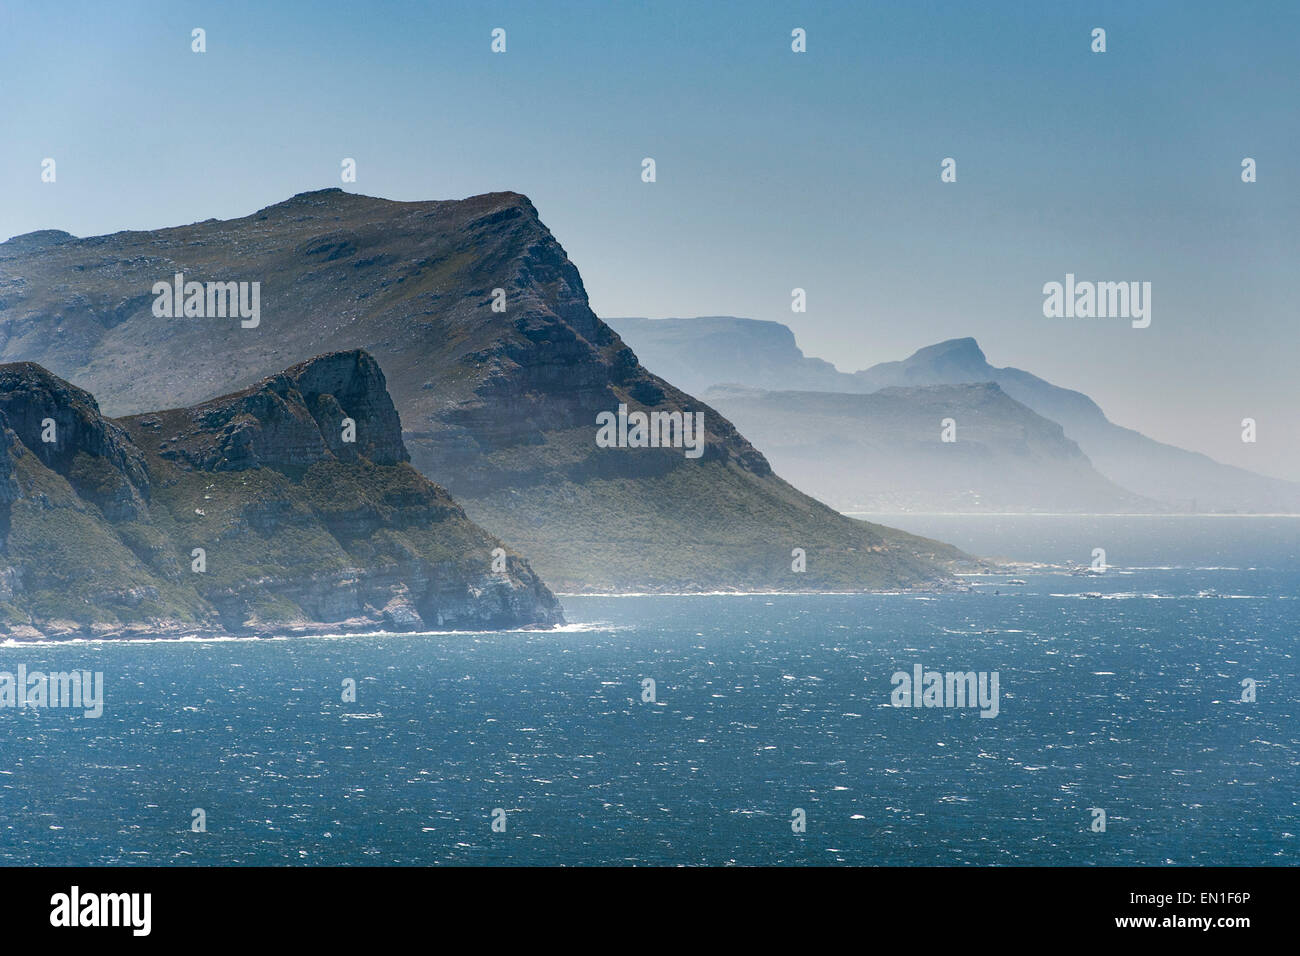 False Bay coastline along the cape peninsula in Cape Town, South Africa. Stock Photo